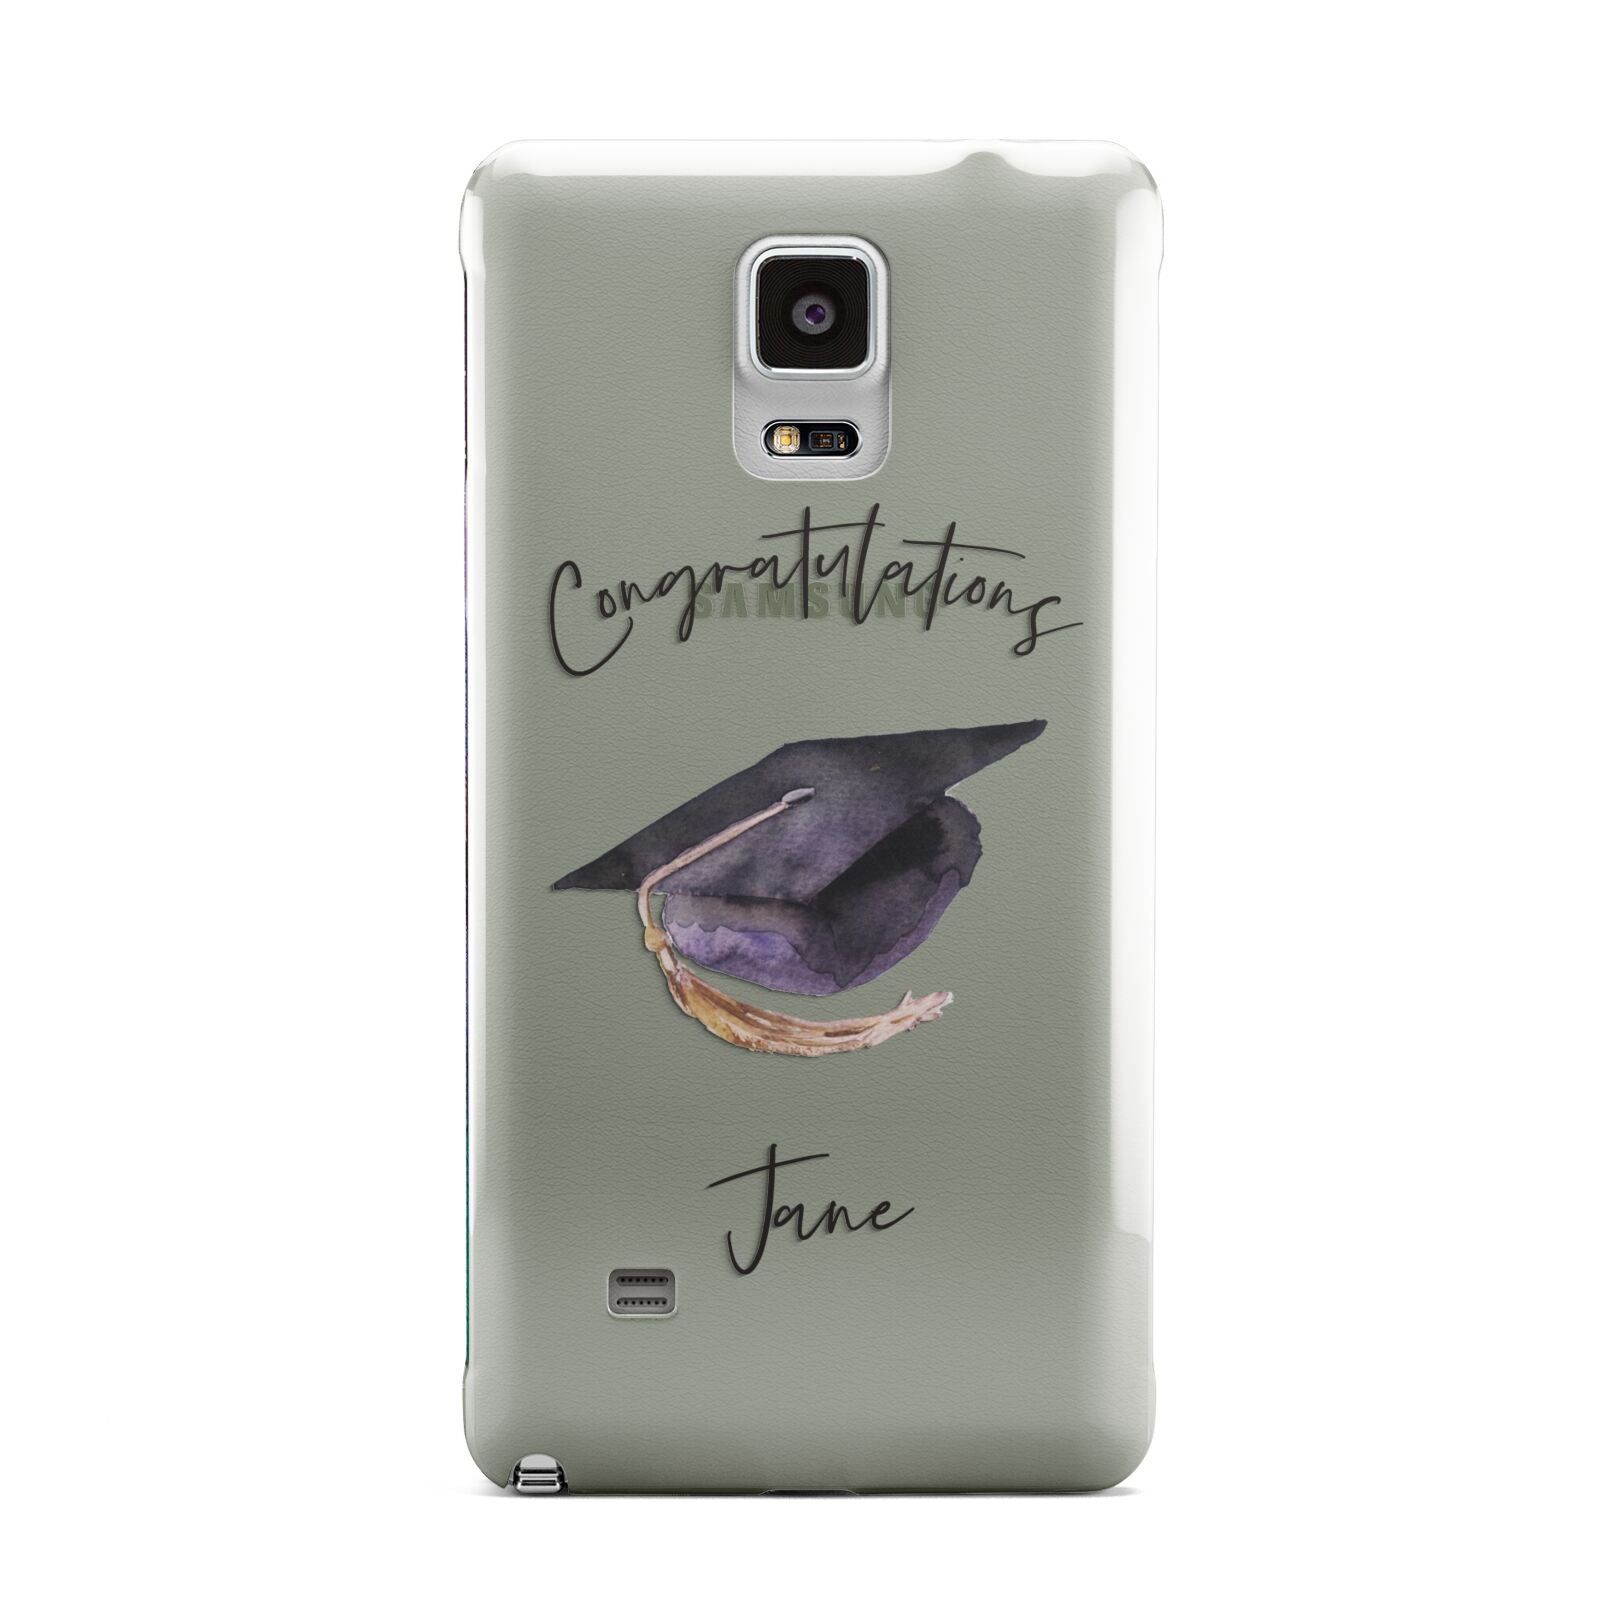 Congratulations Graduate Custom Samsung Galaxy Note 4 Case